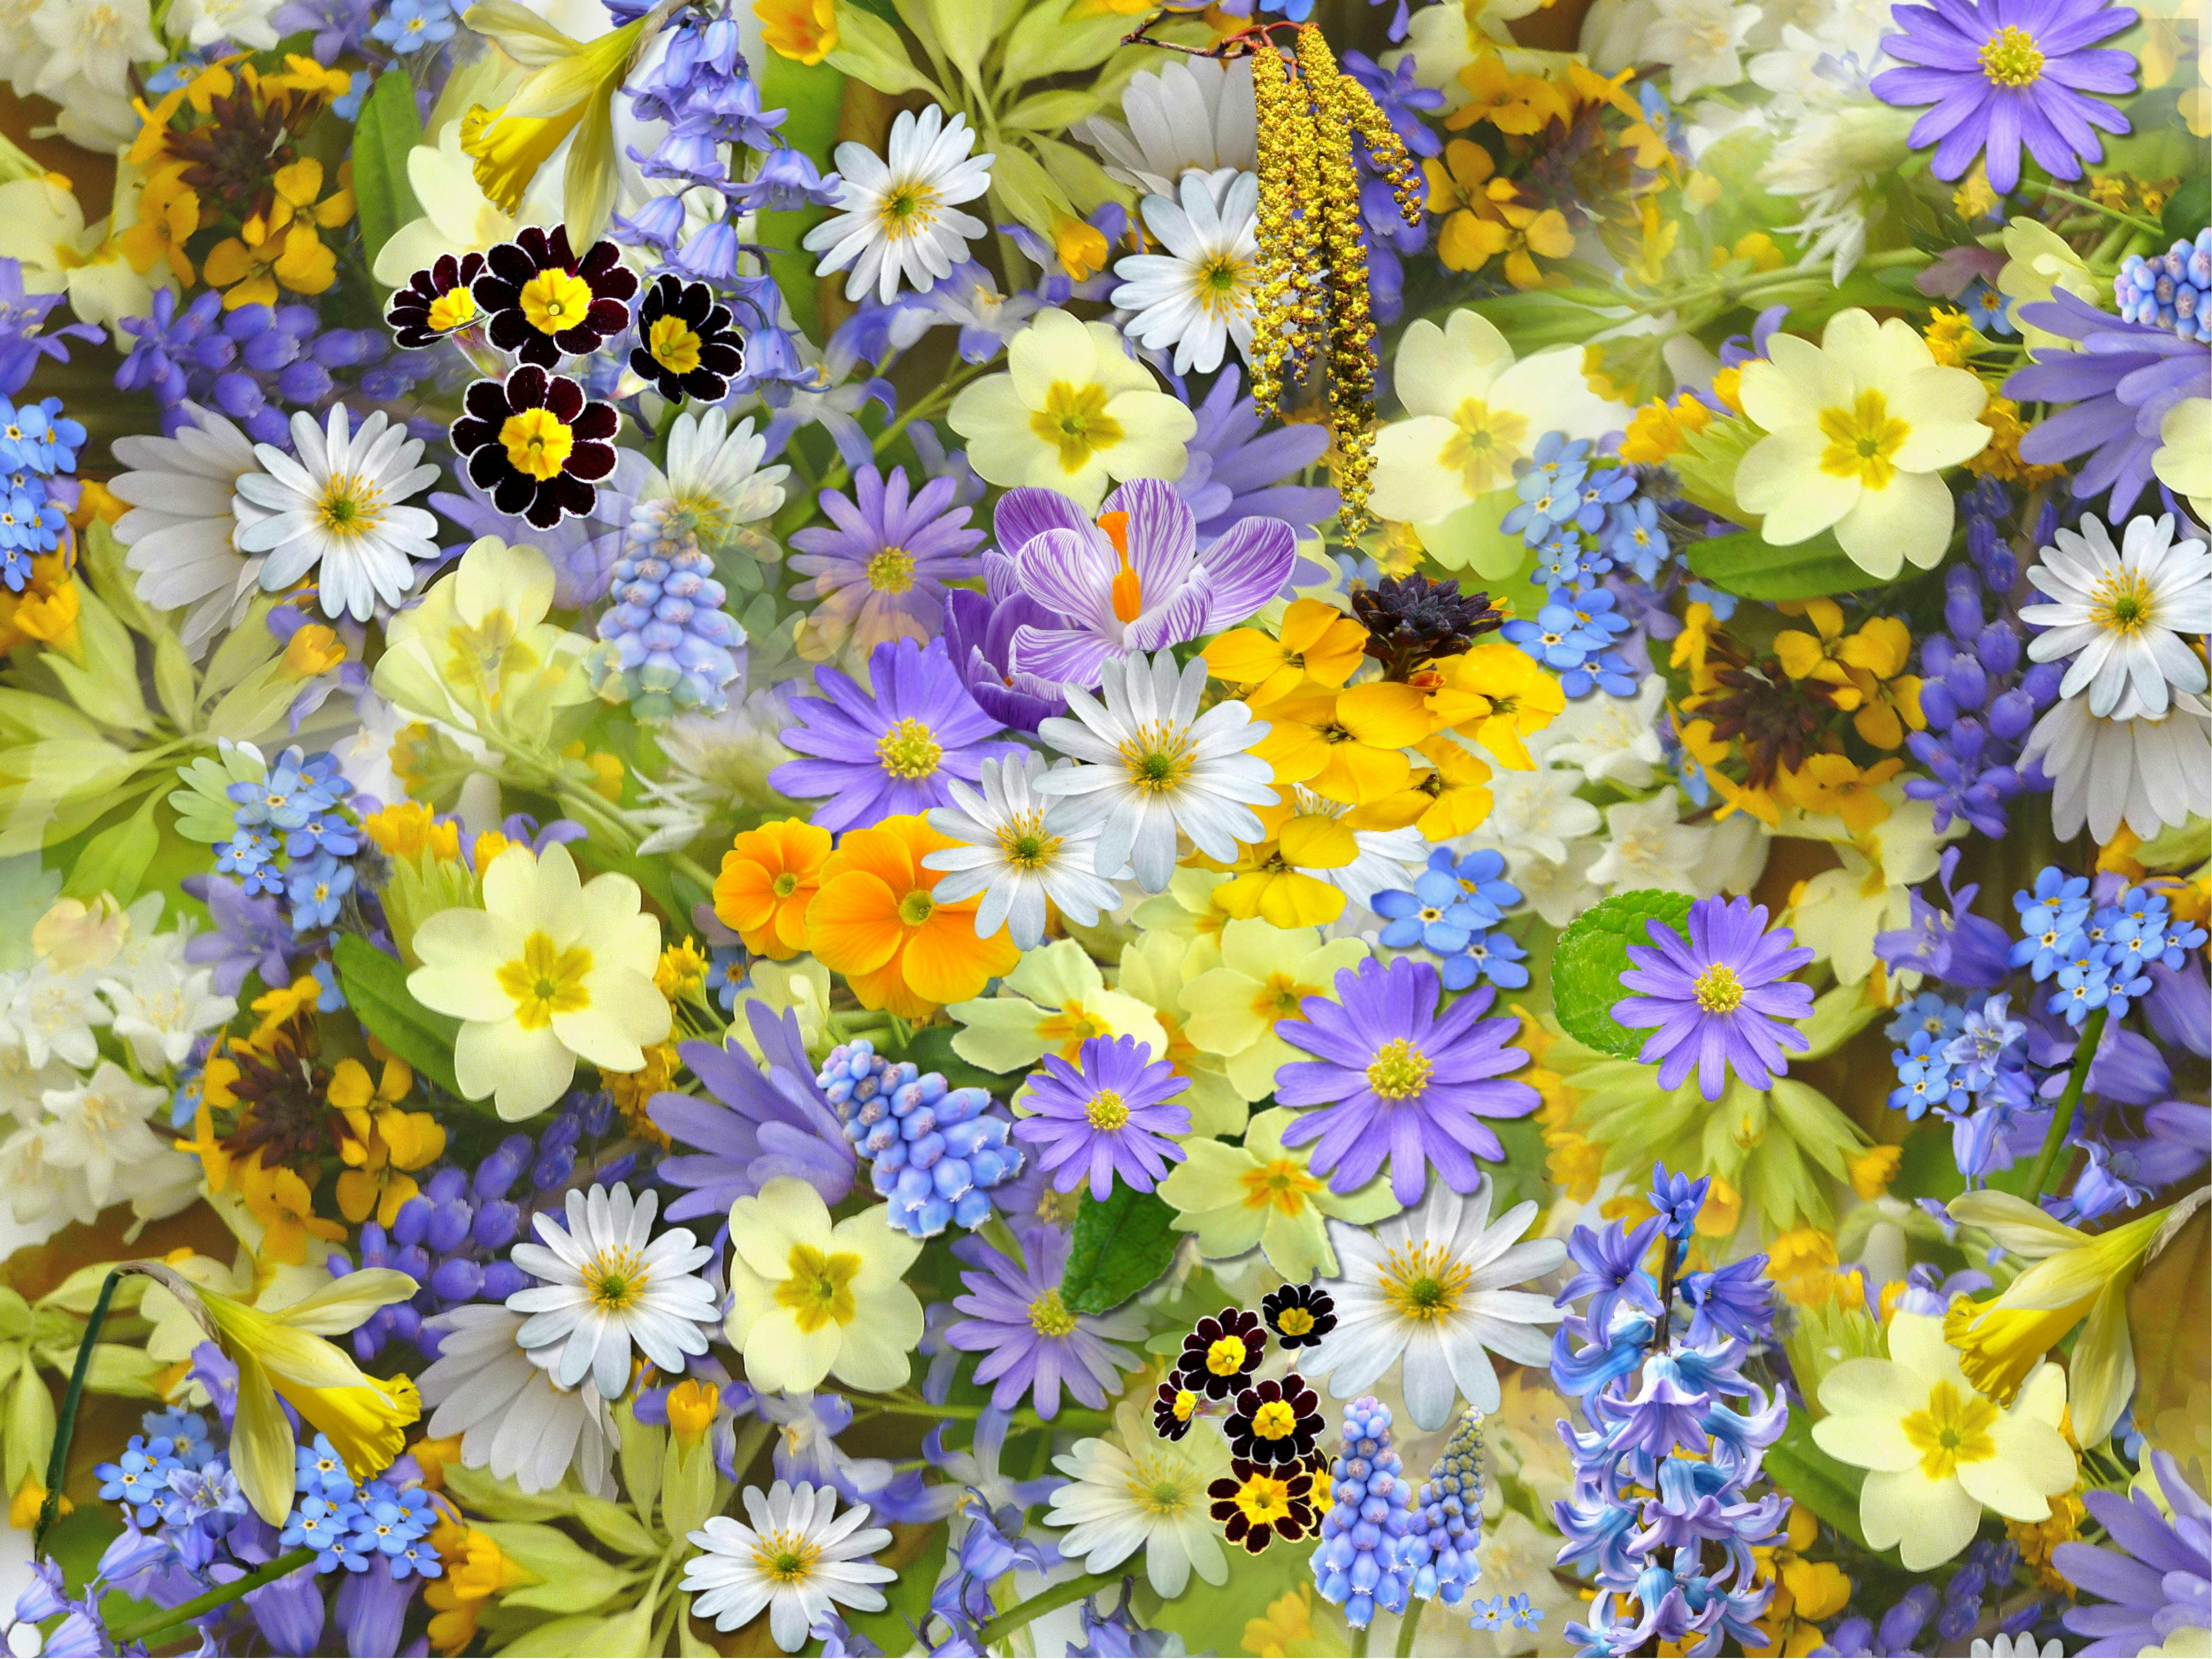 Flower Wallpaper Images  Free Download on Freepik